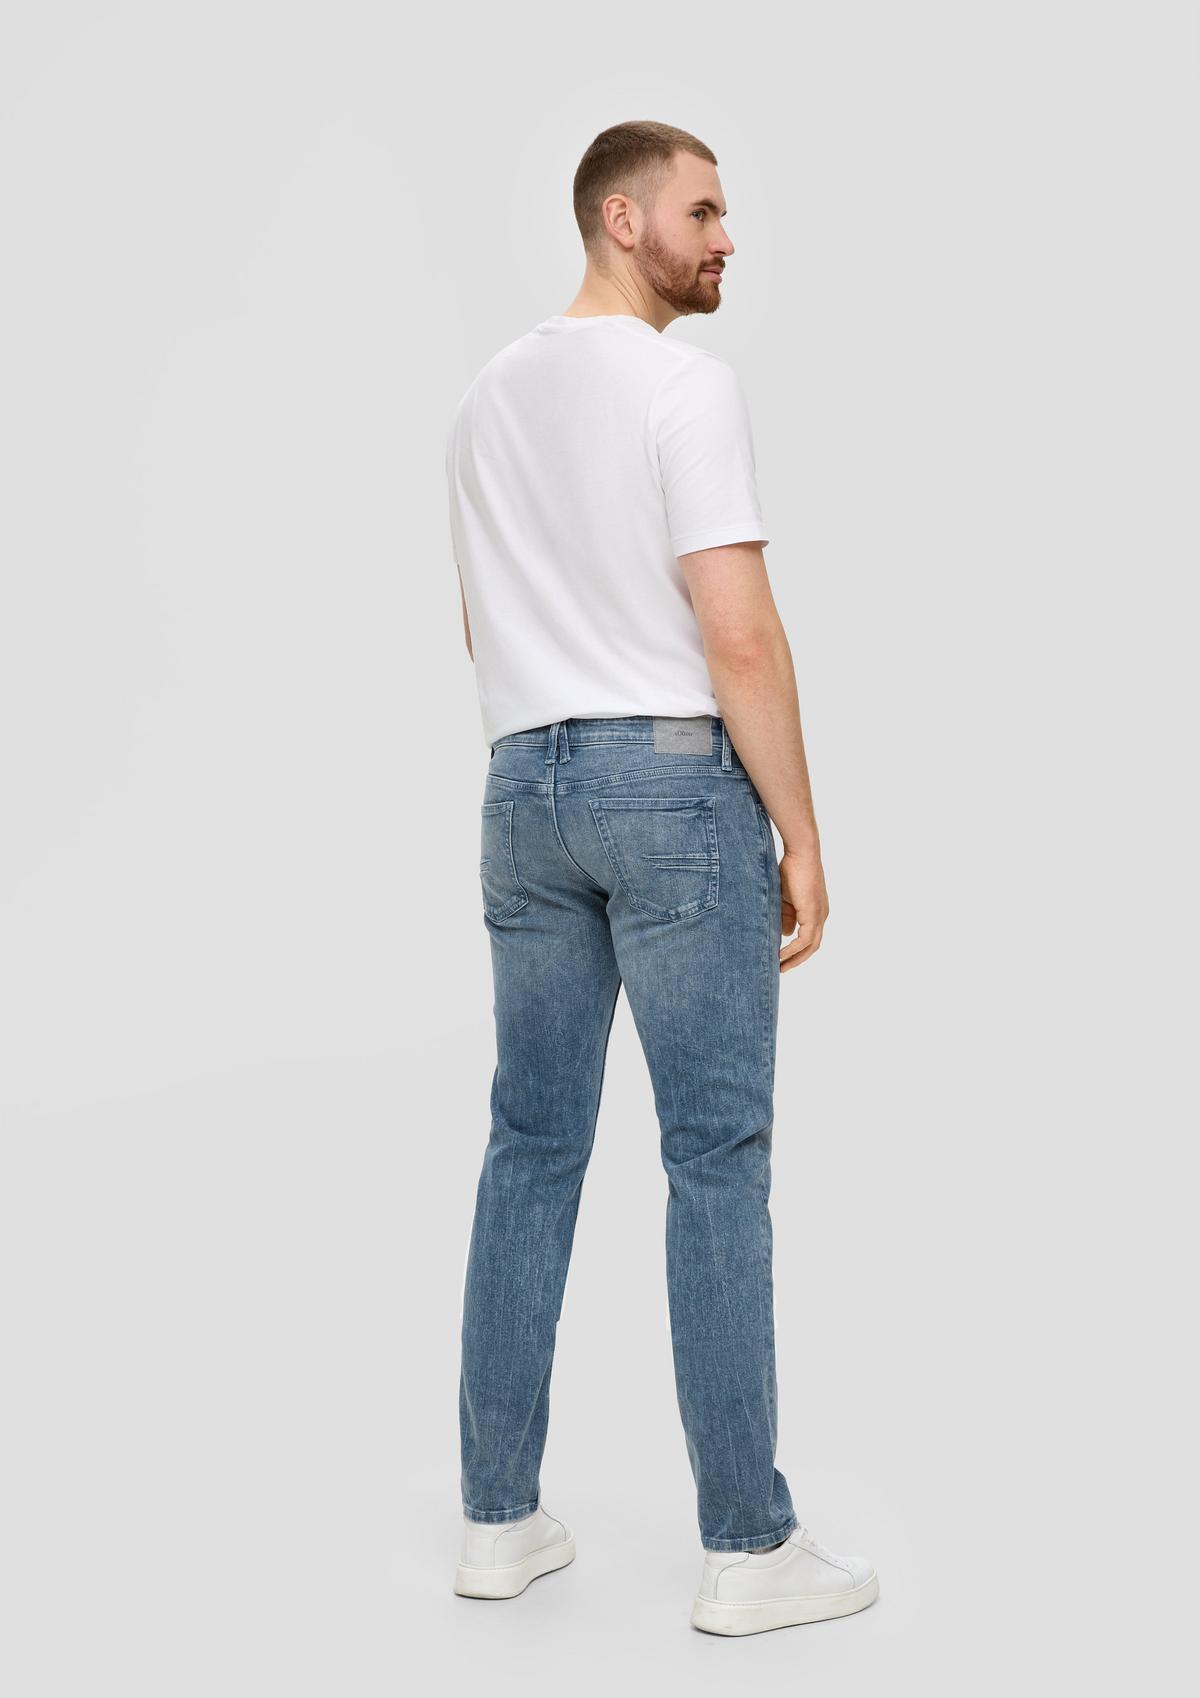 s.Oliver Jeans York / regular fit / mid rise / straight leg